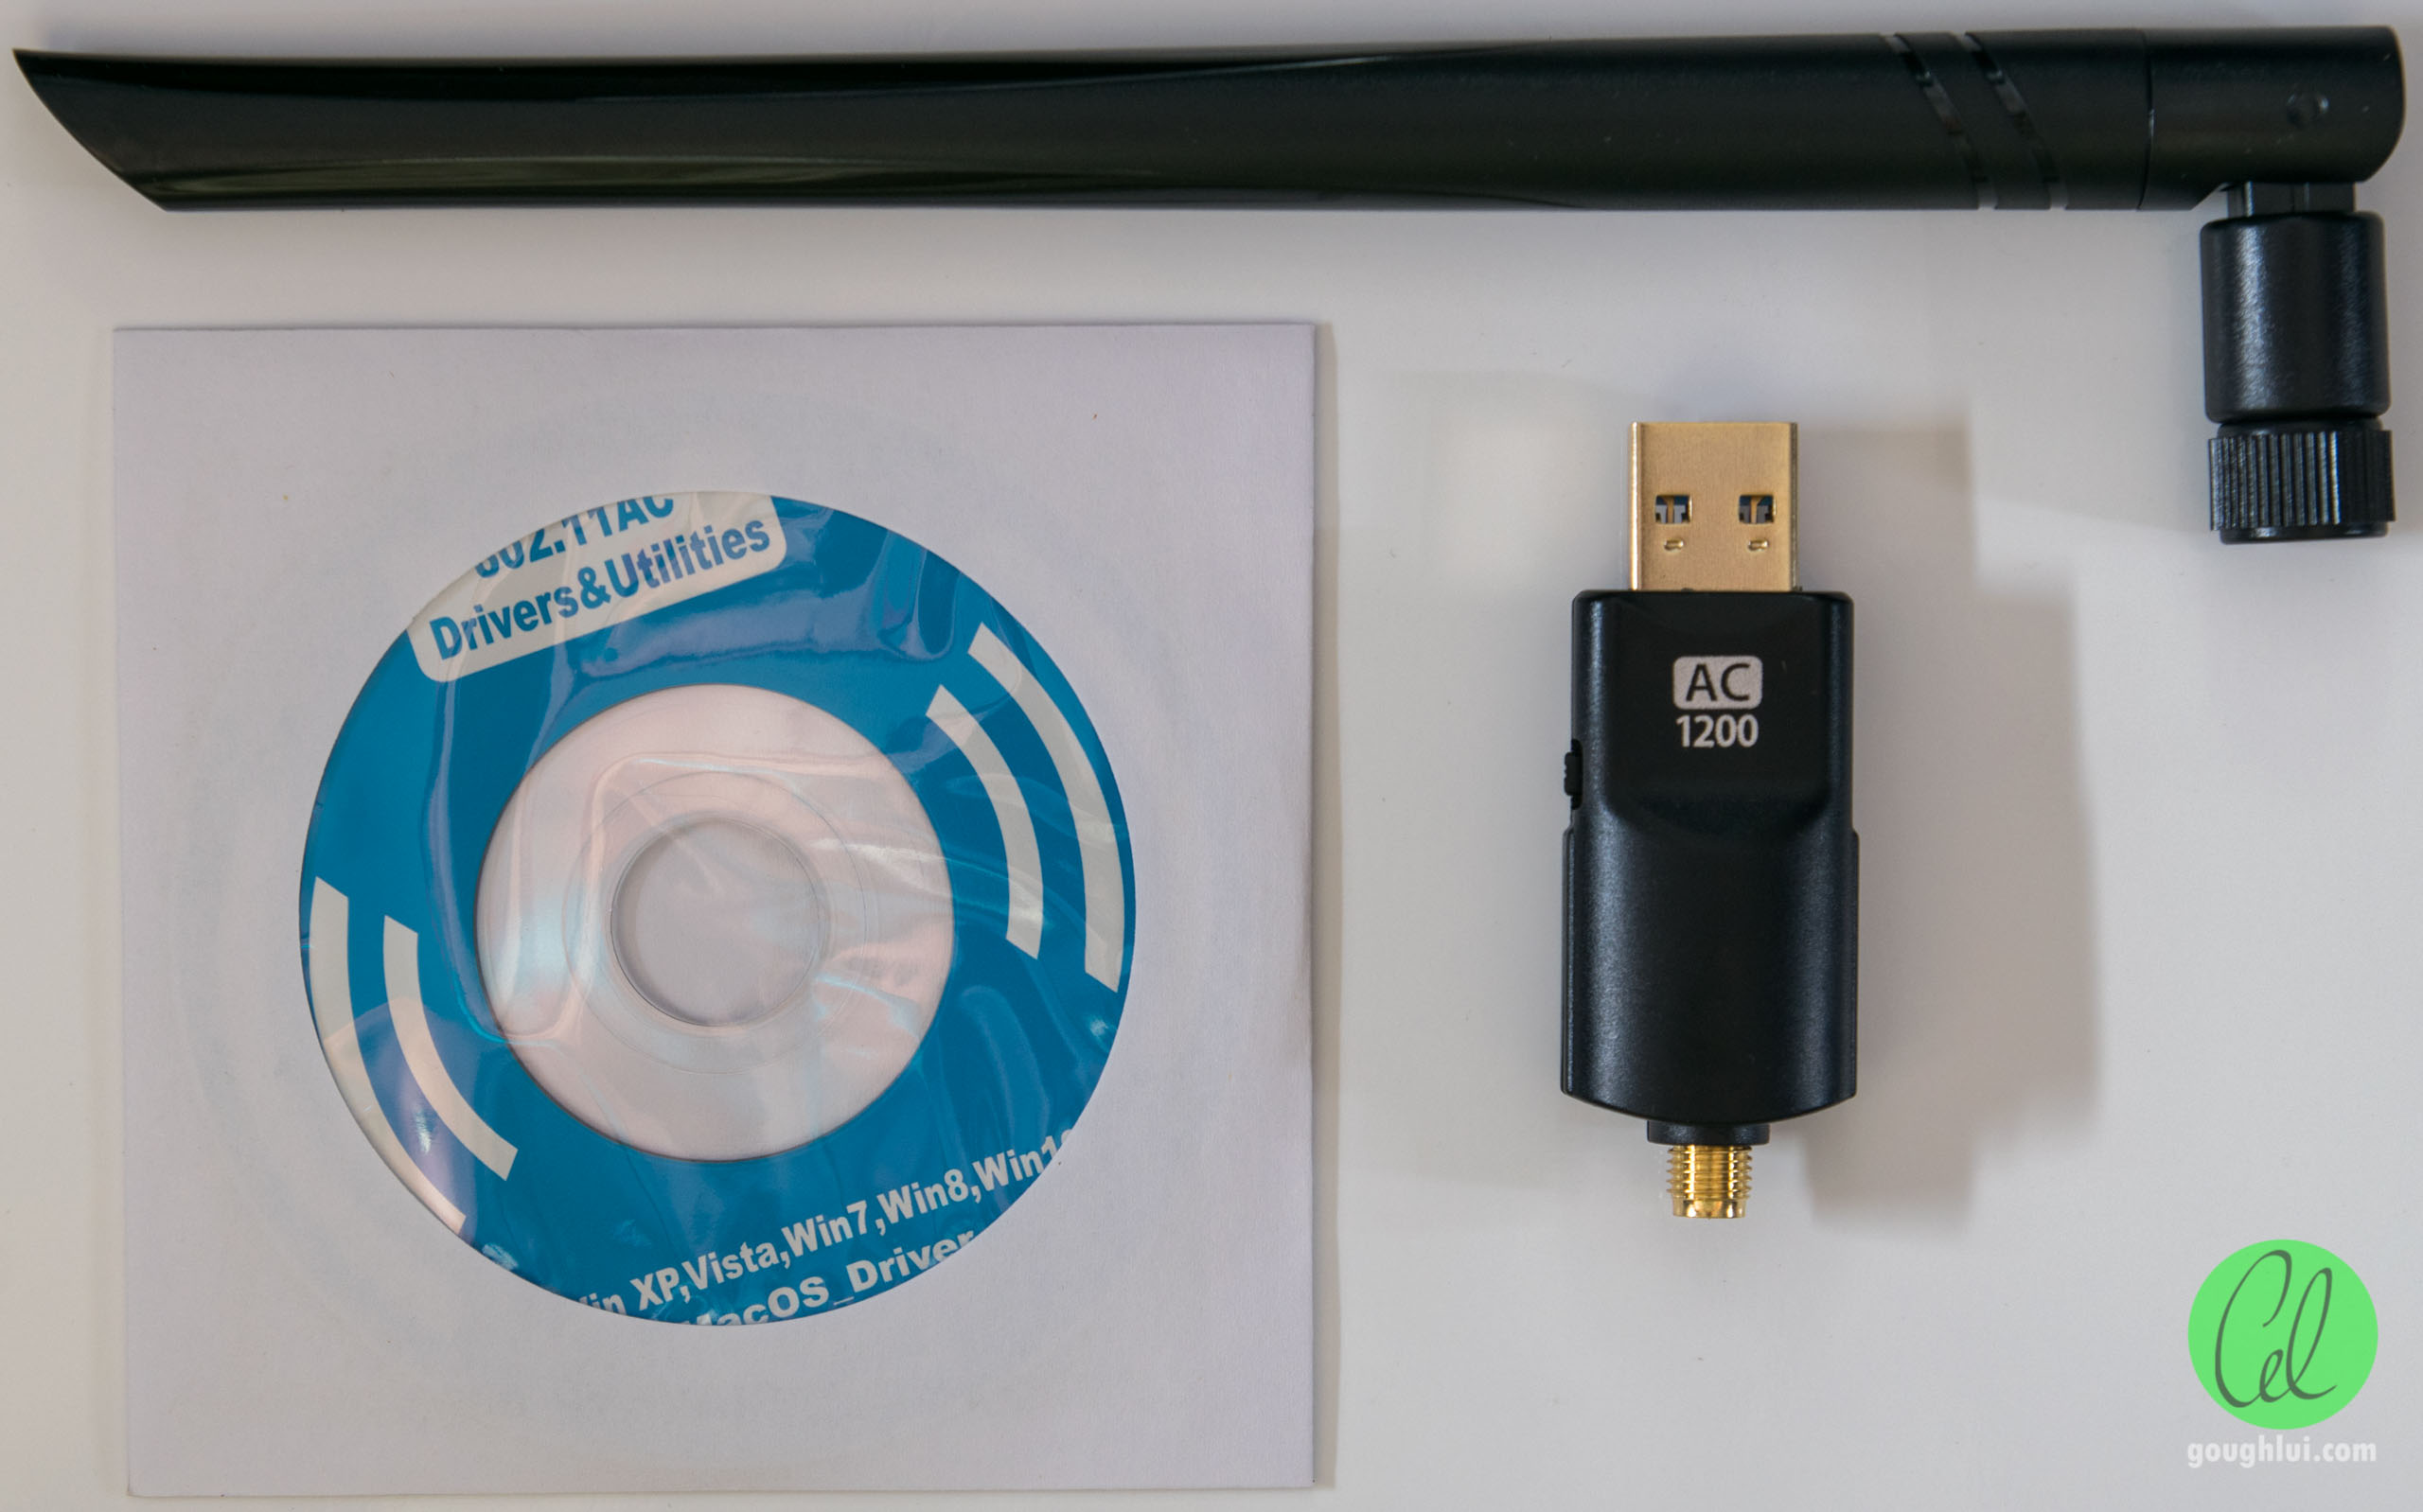 802.11 n wlan adapter драйвер. USB Wi-Fi адаптер Realtek 802.11AC nic. Realtek 8812bu Wireless lan 802.11AC USB nic драйвер. Dual Band 1200ac драйвер. AC 1300 WIFI USB адаптер драйвер.